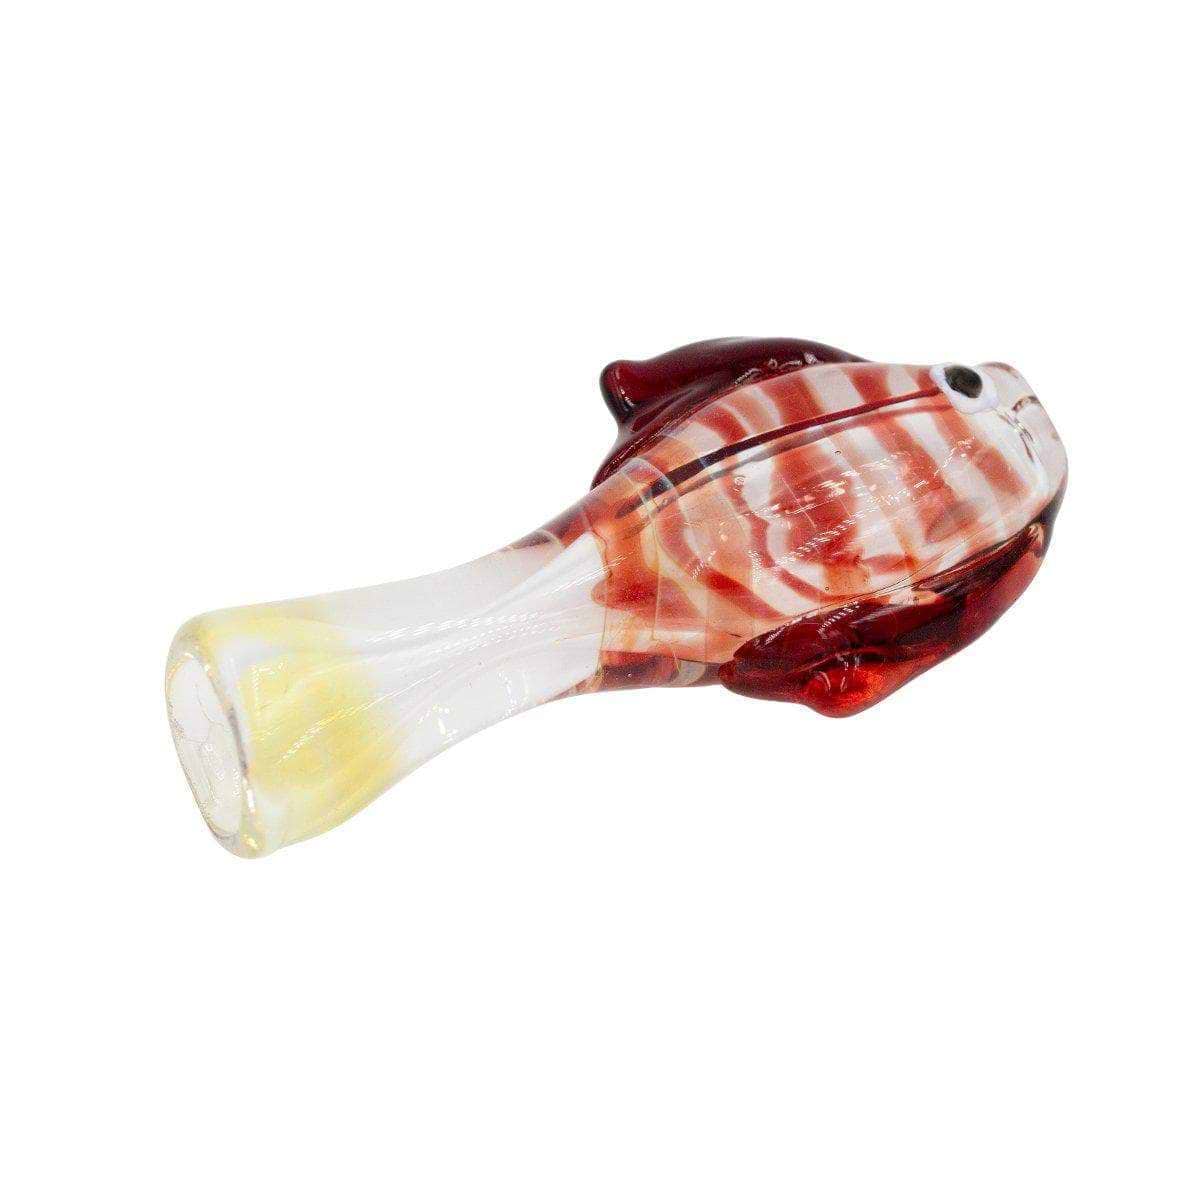 2.5-inch fish-shaped oney one hitter smoking device vibrant swirling marine colors, refreshing aquatic design big fish eyes